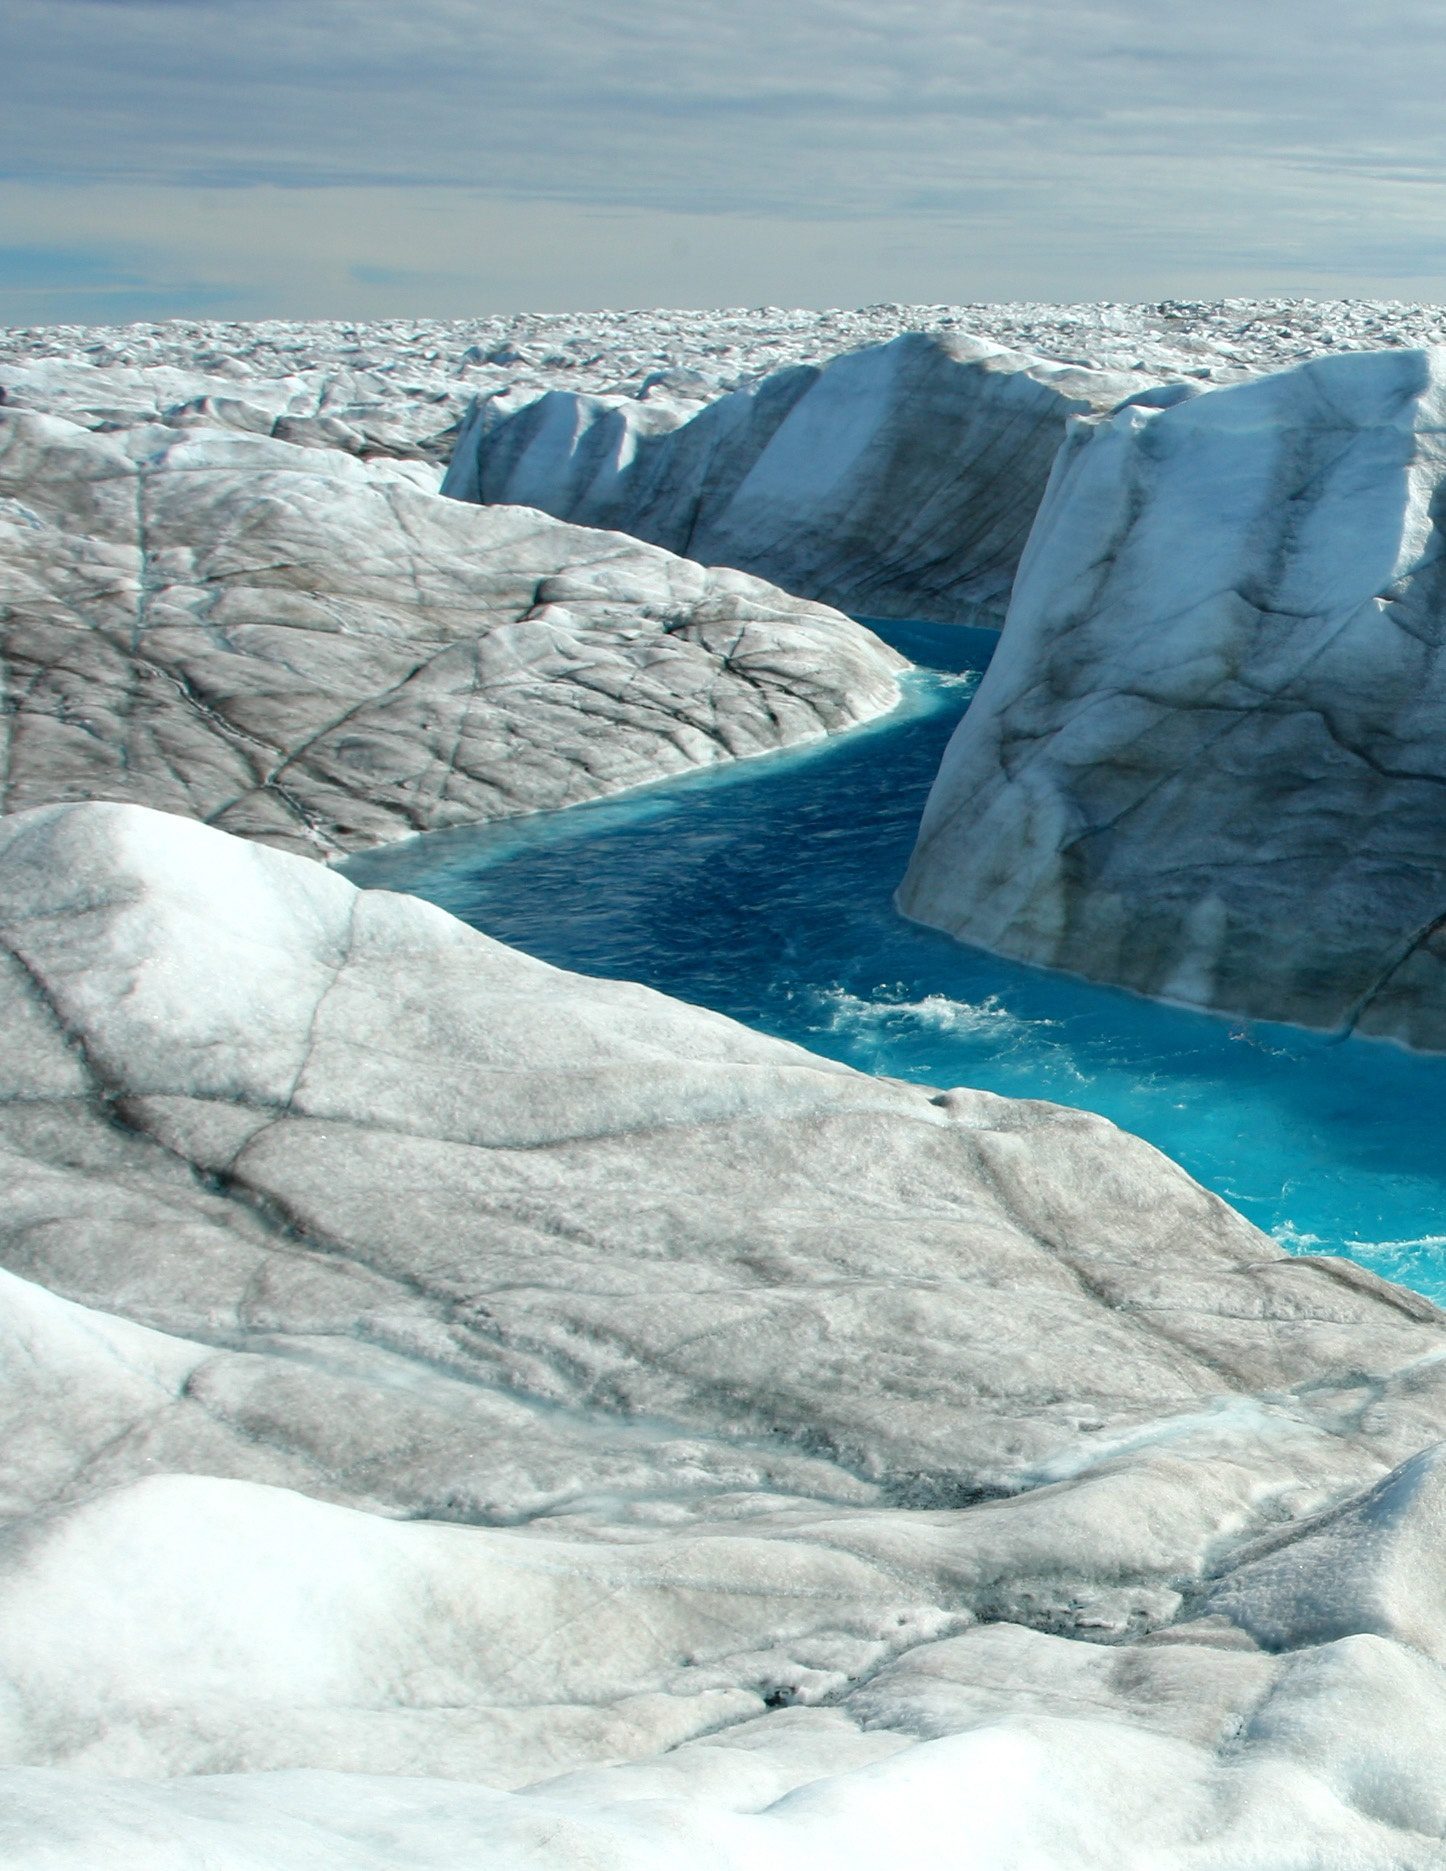 Satellites Detect Speed of Greenland Ice Sheet